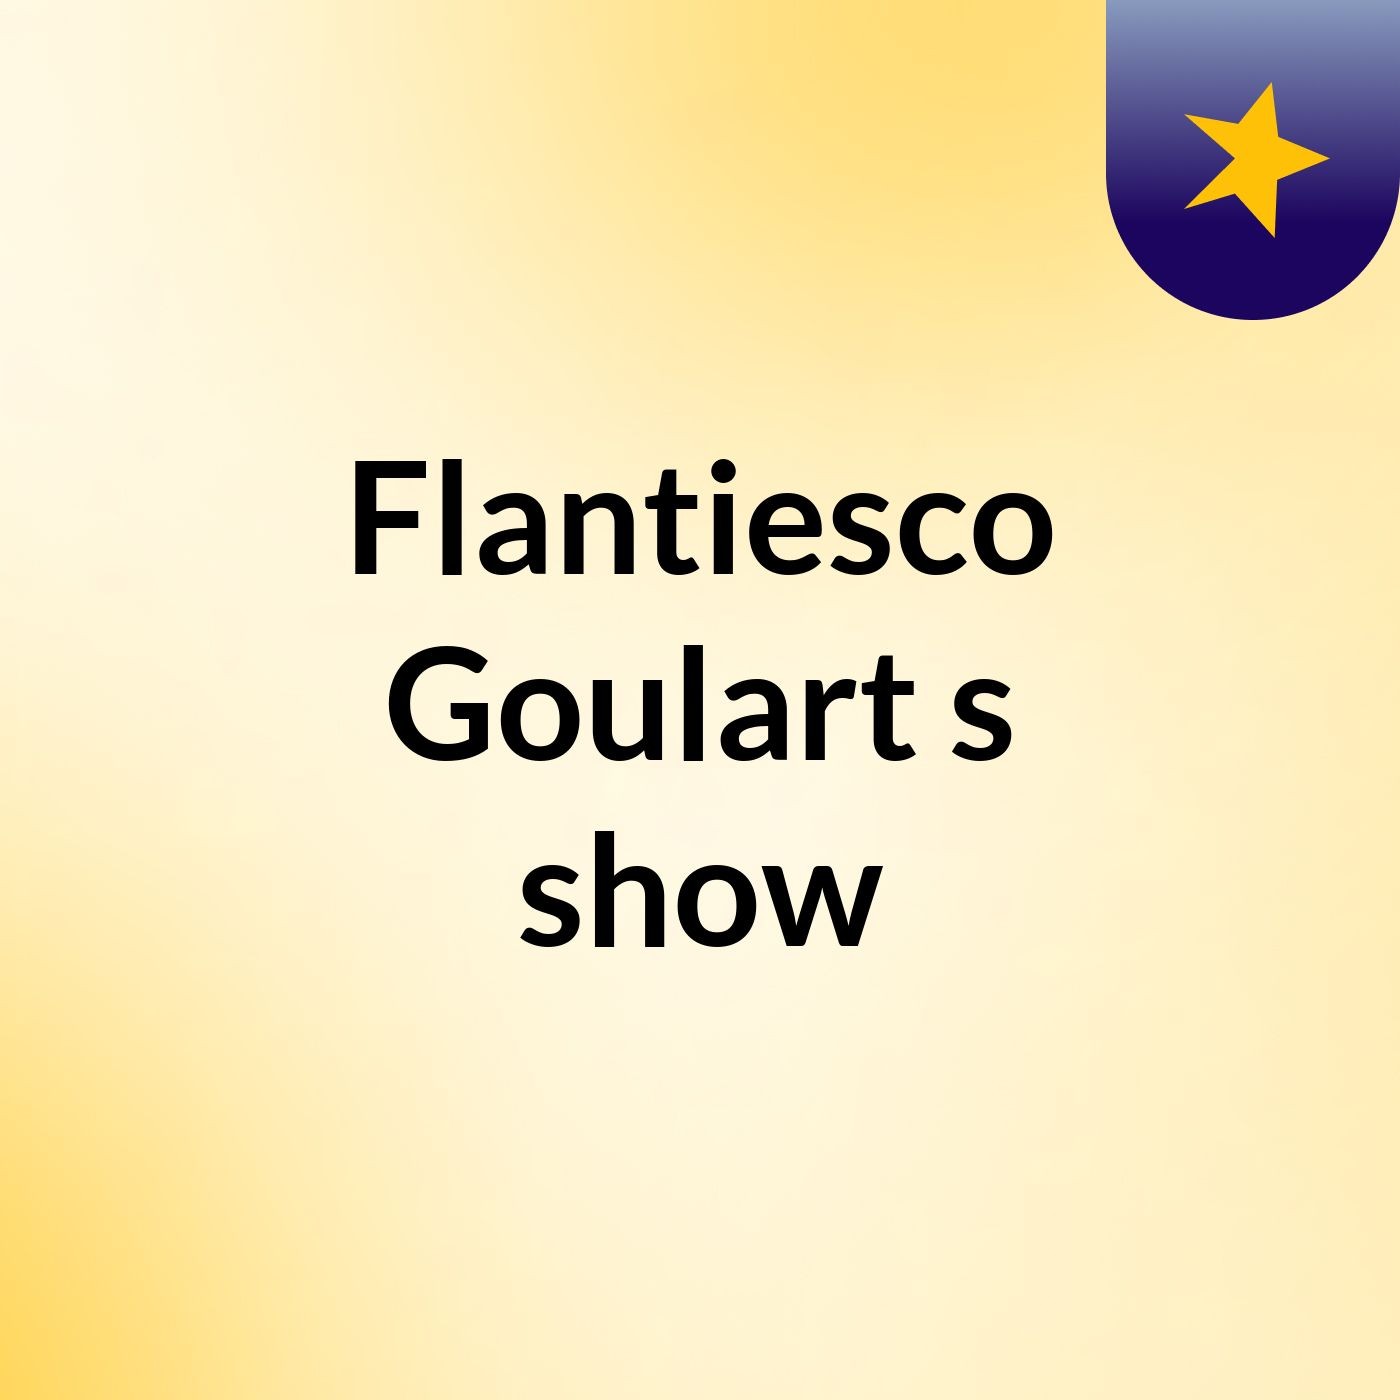 Flantiesco Goulart's show